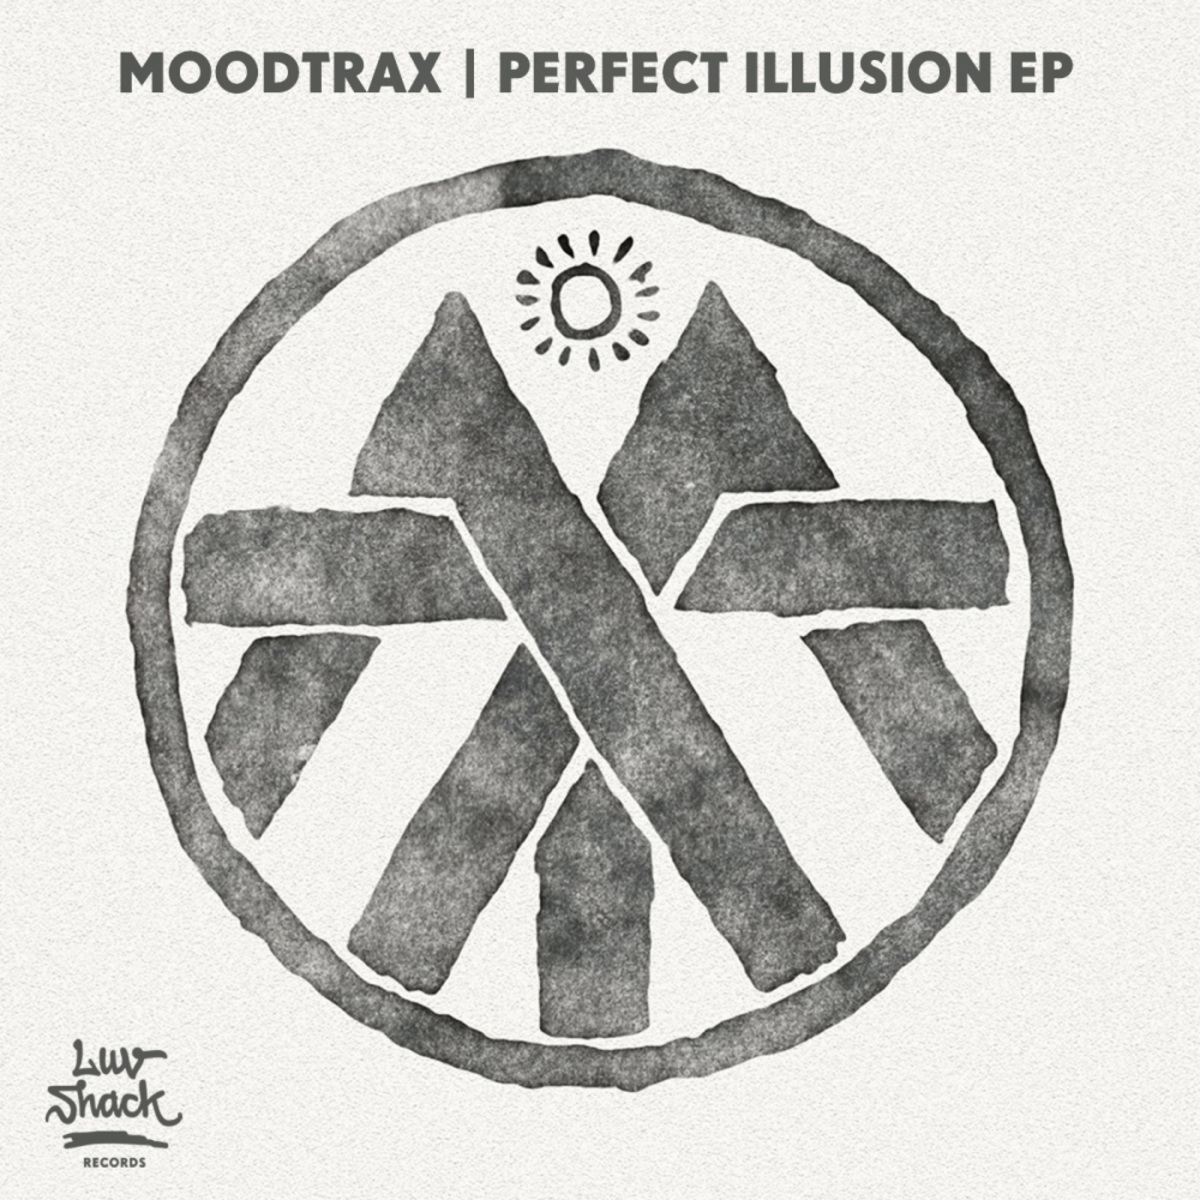 Moodtrax - Perfect Illusion EP / Luv Shack Records